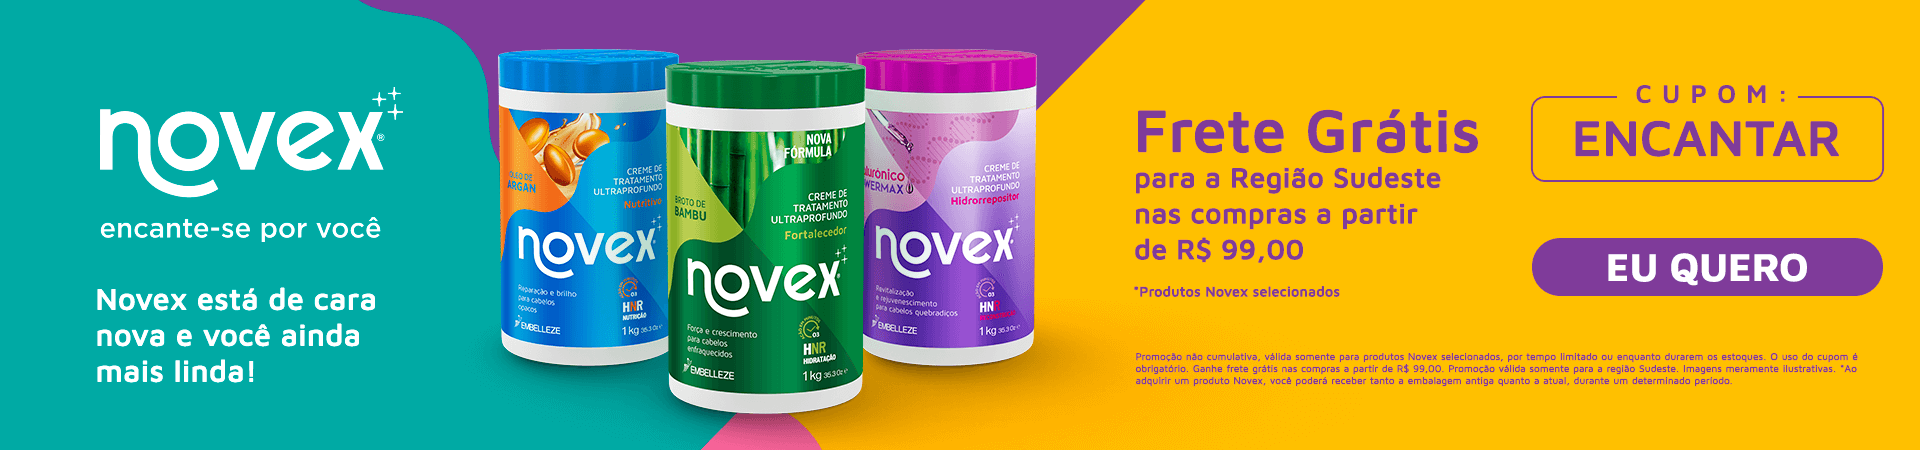 Rebranding Novex - Banner 3